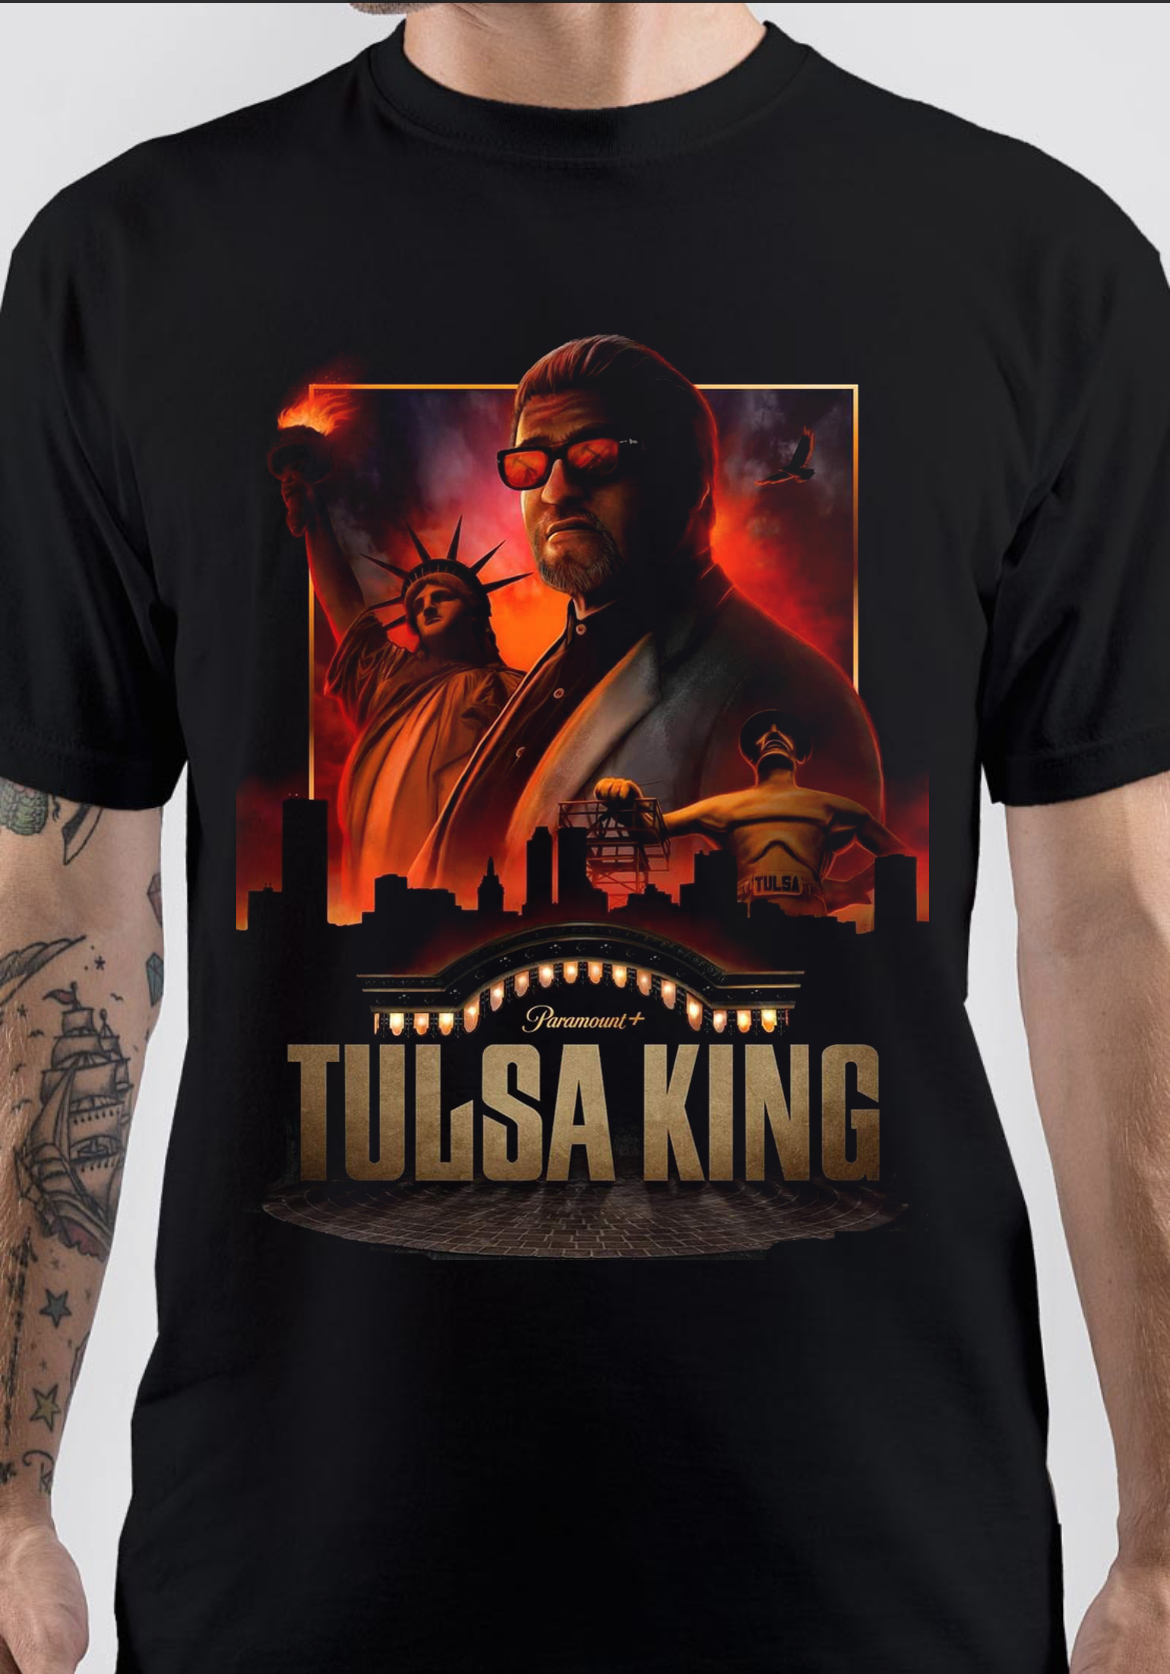 Tulsa King T-Shirt And Merchandise